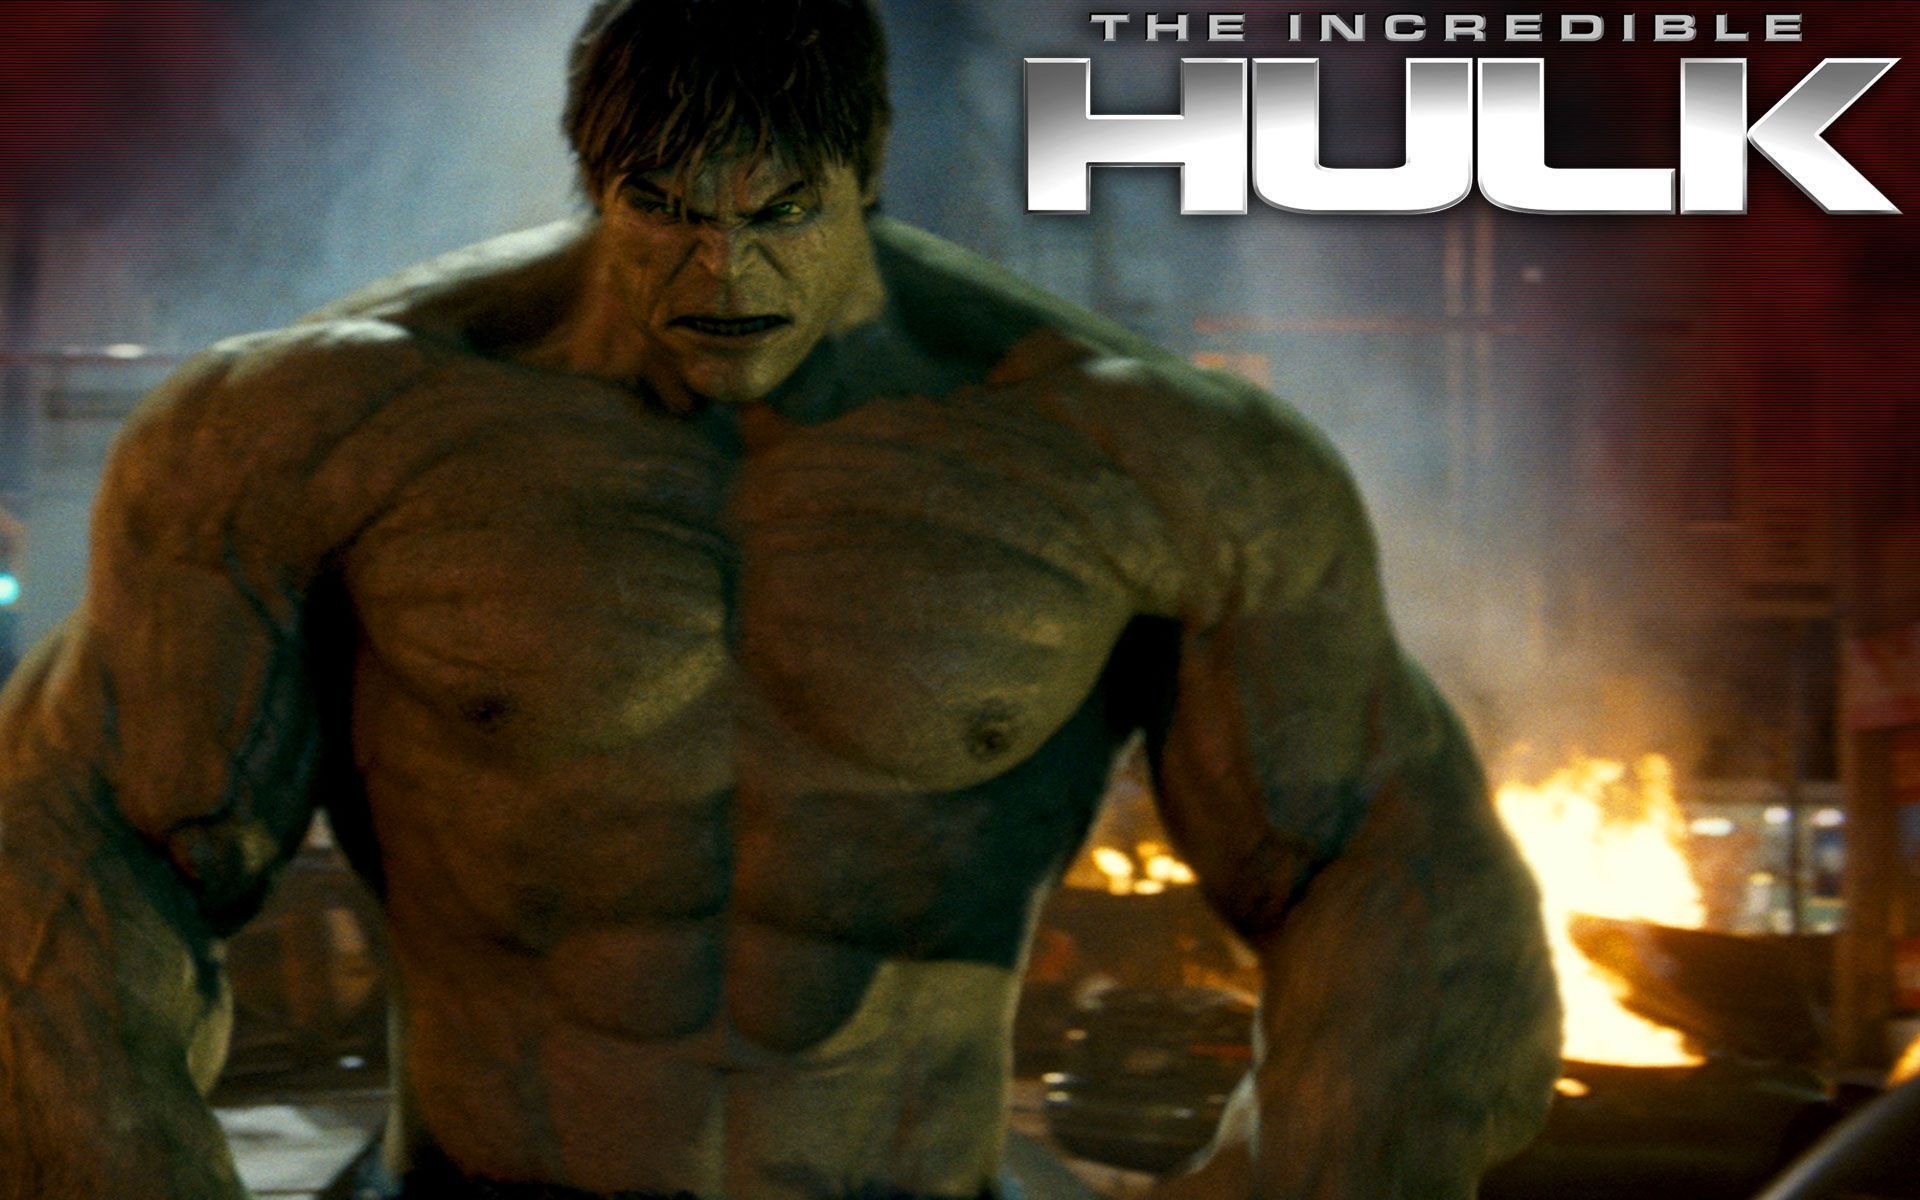 The Incredible Hulk Wallpaper 1080p O47wb6b 4usky